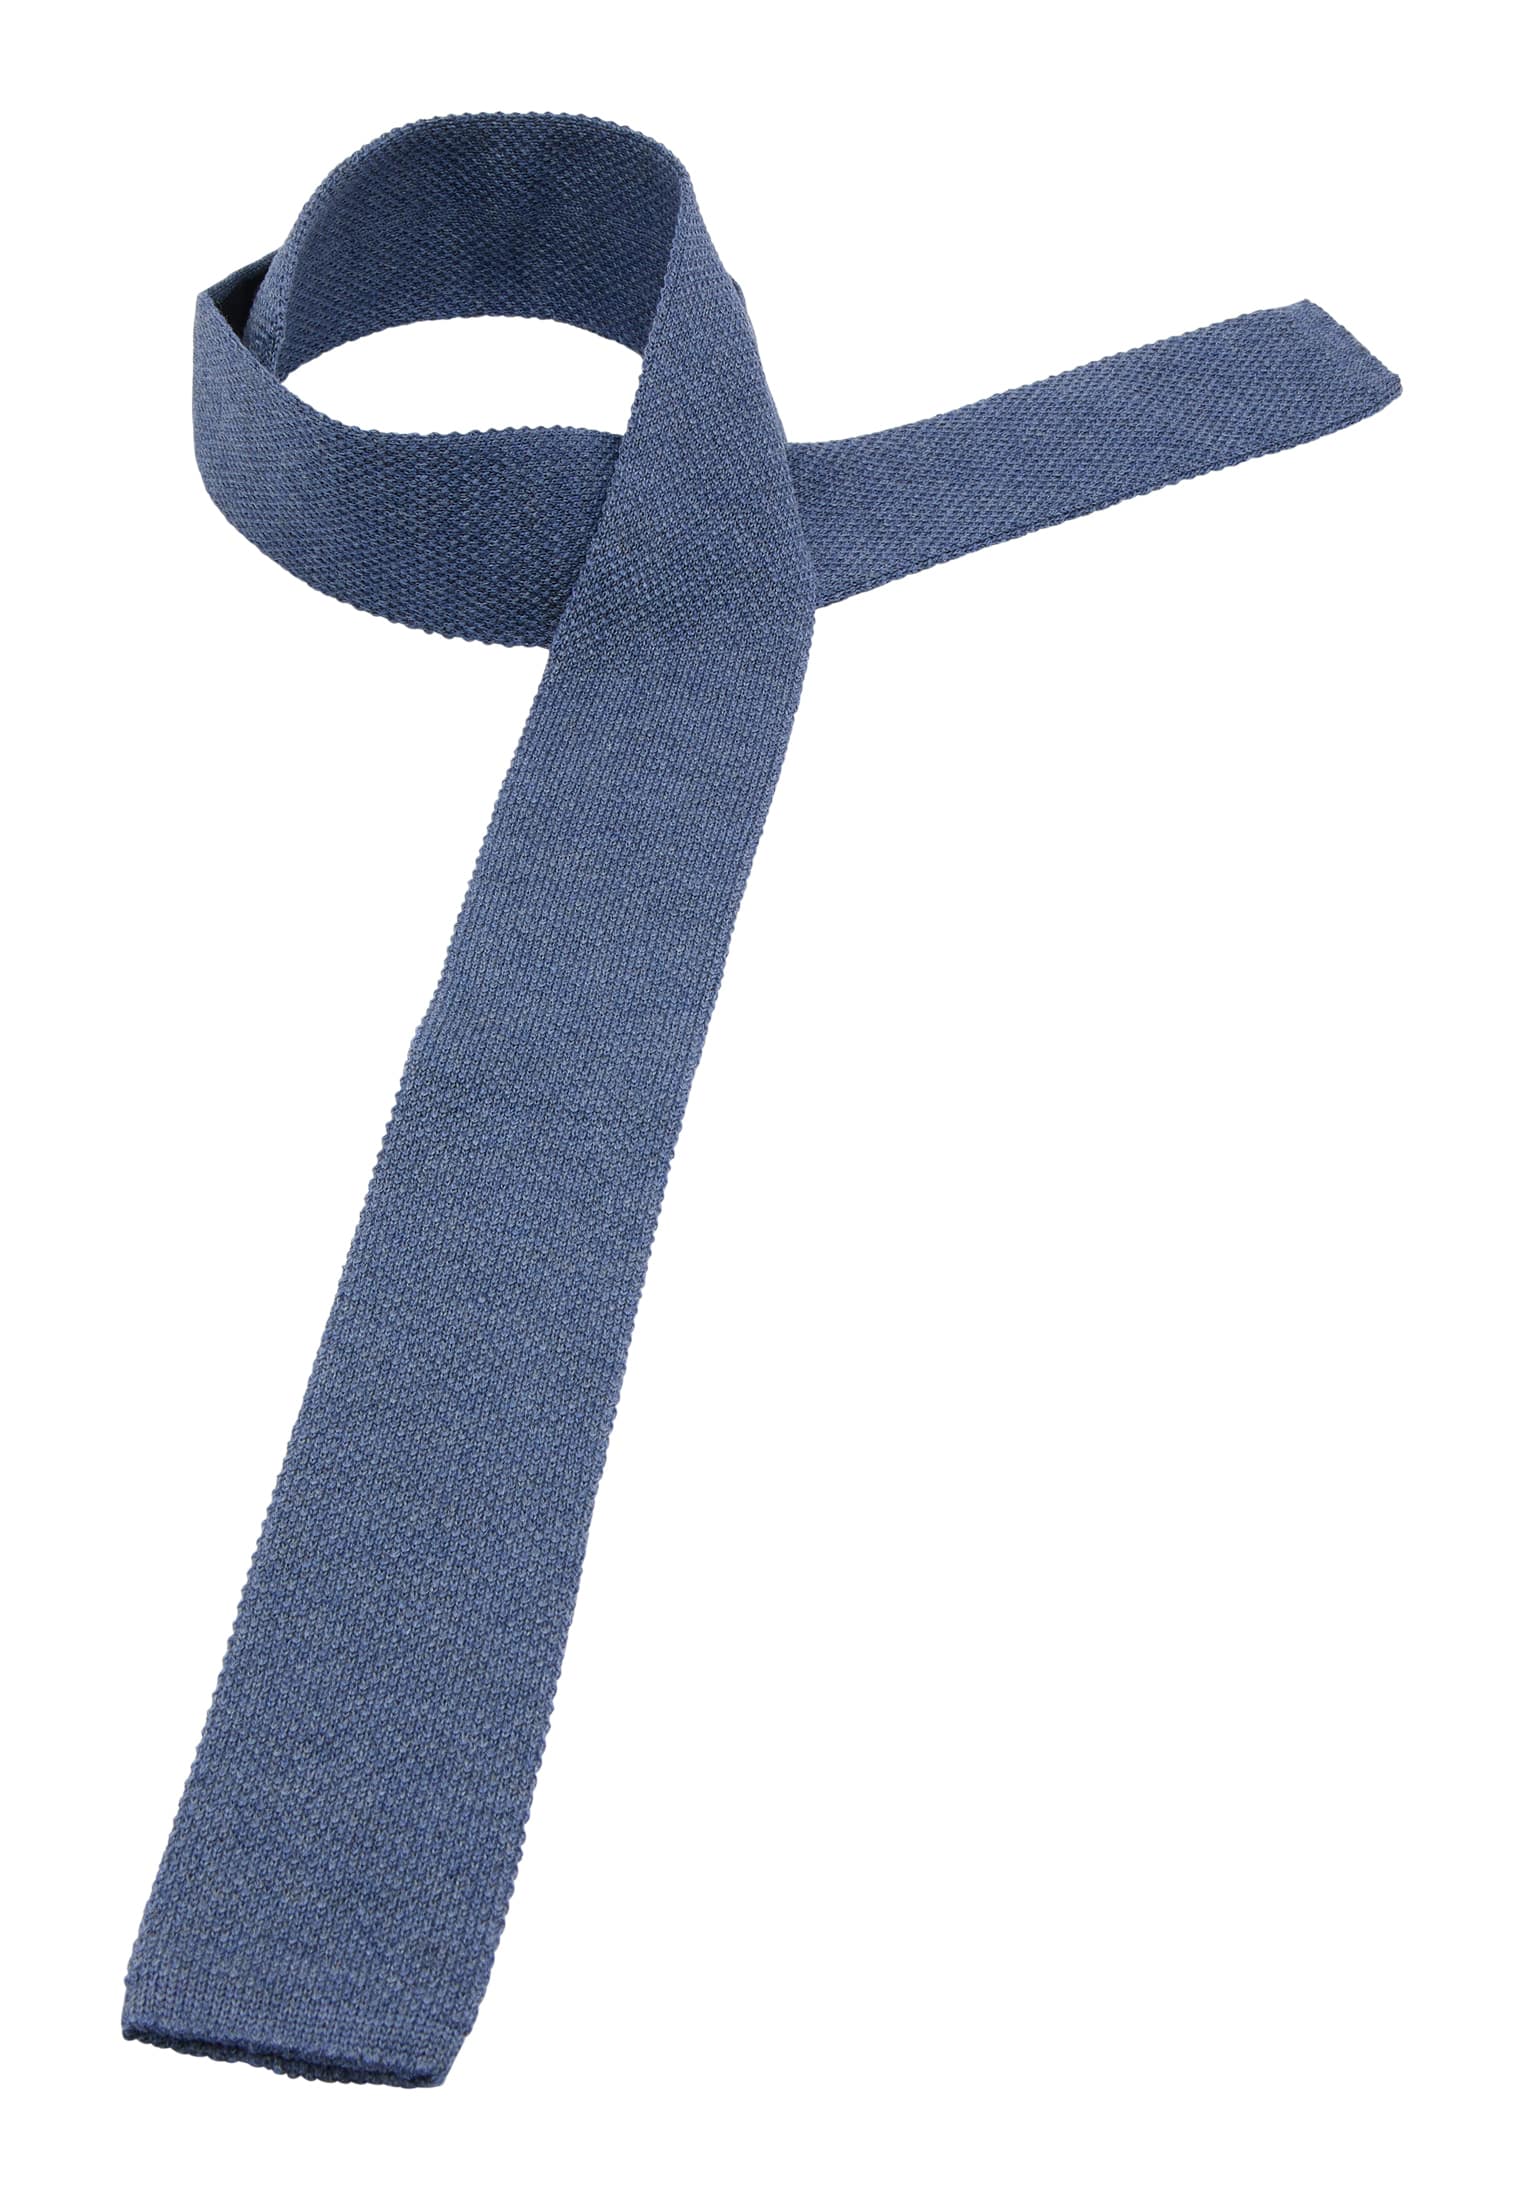 Krawatte in dunkelblau strukturiert | dunkelblau | 142 | 1AC01880-01-81-142